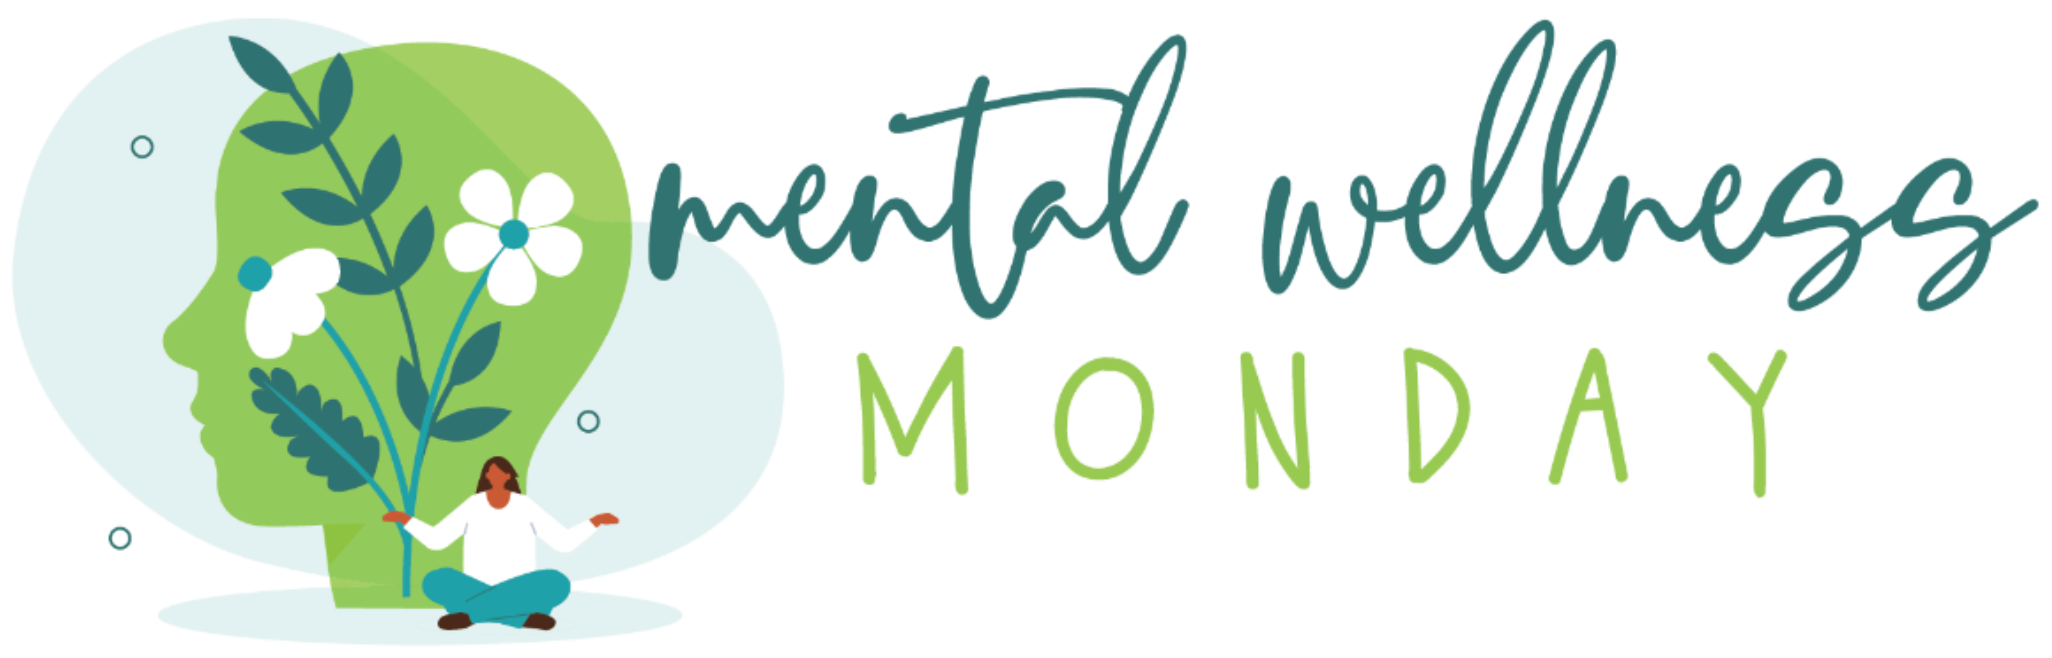 Mental Wellness Monday logo